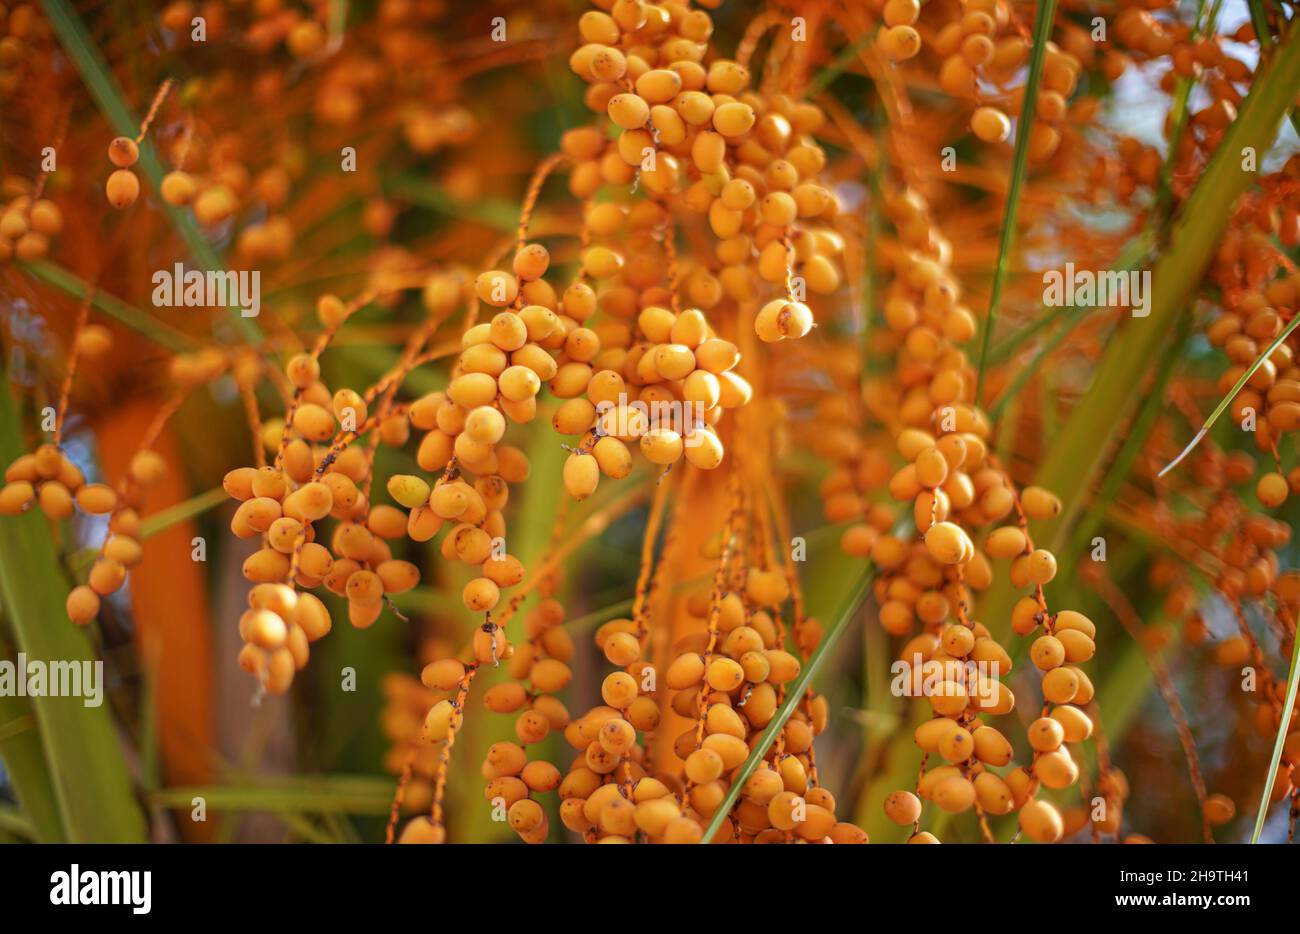 Pindo jelly palm tree (butia capitata) yellow fruits, closeup macro detail Stock Photo